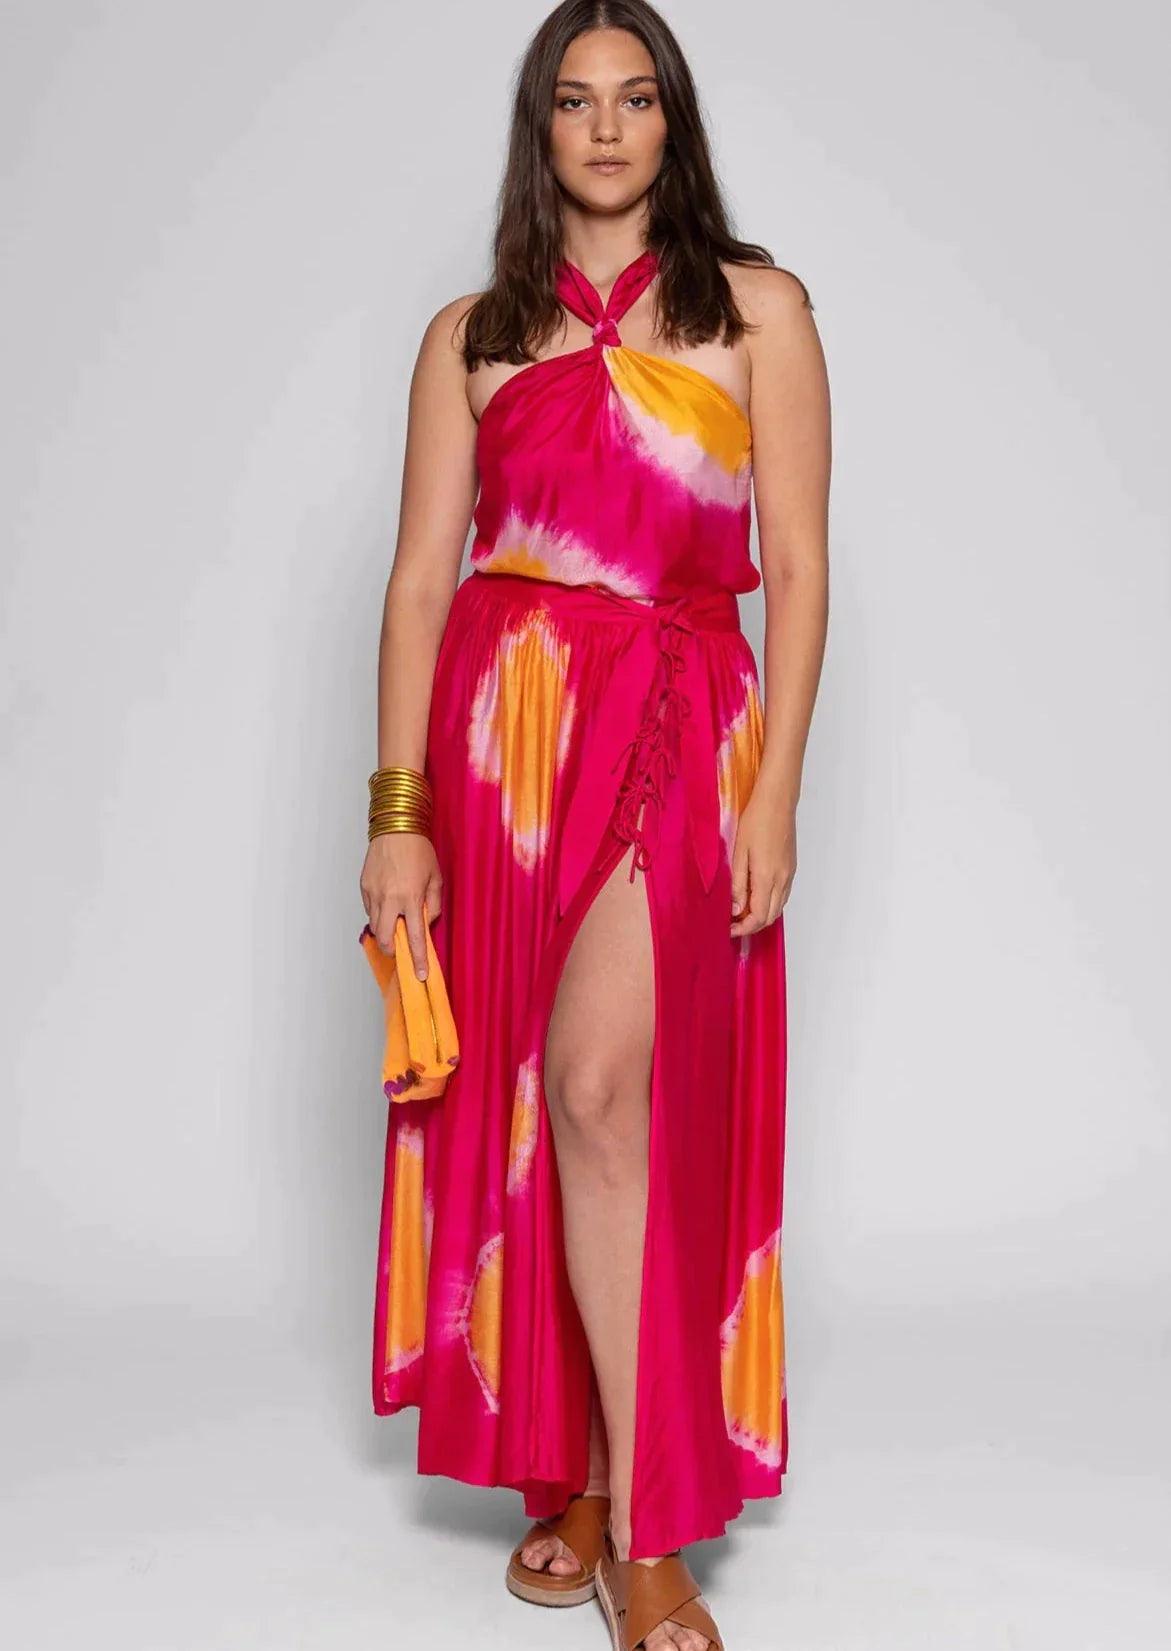 Sundress - Paulette Skirt in Tie Dye - OutDazl